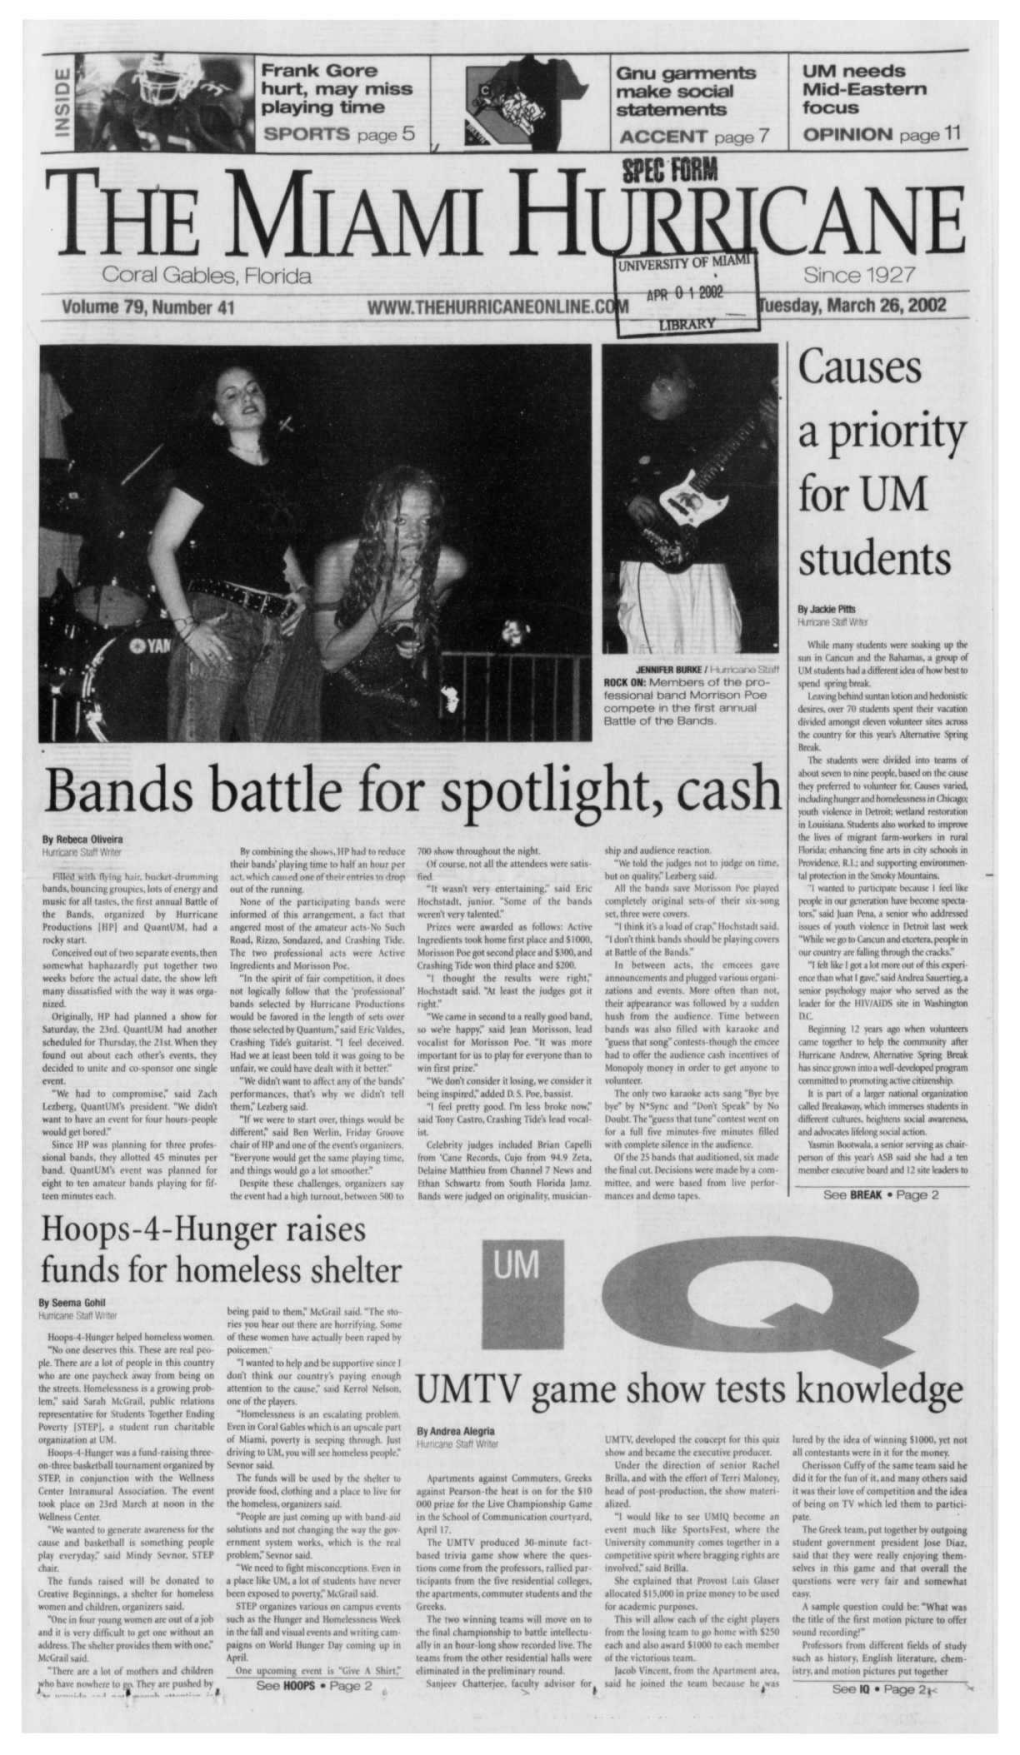 Bands Battle for Spotlight, Cash